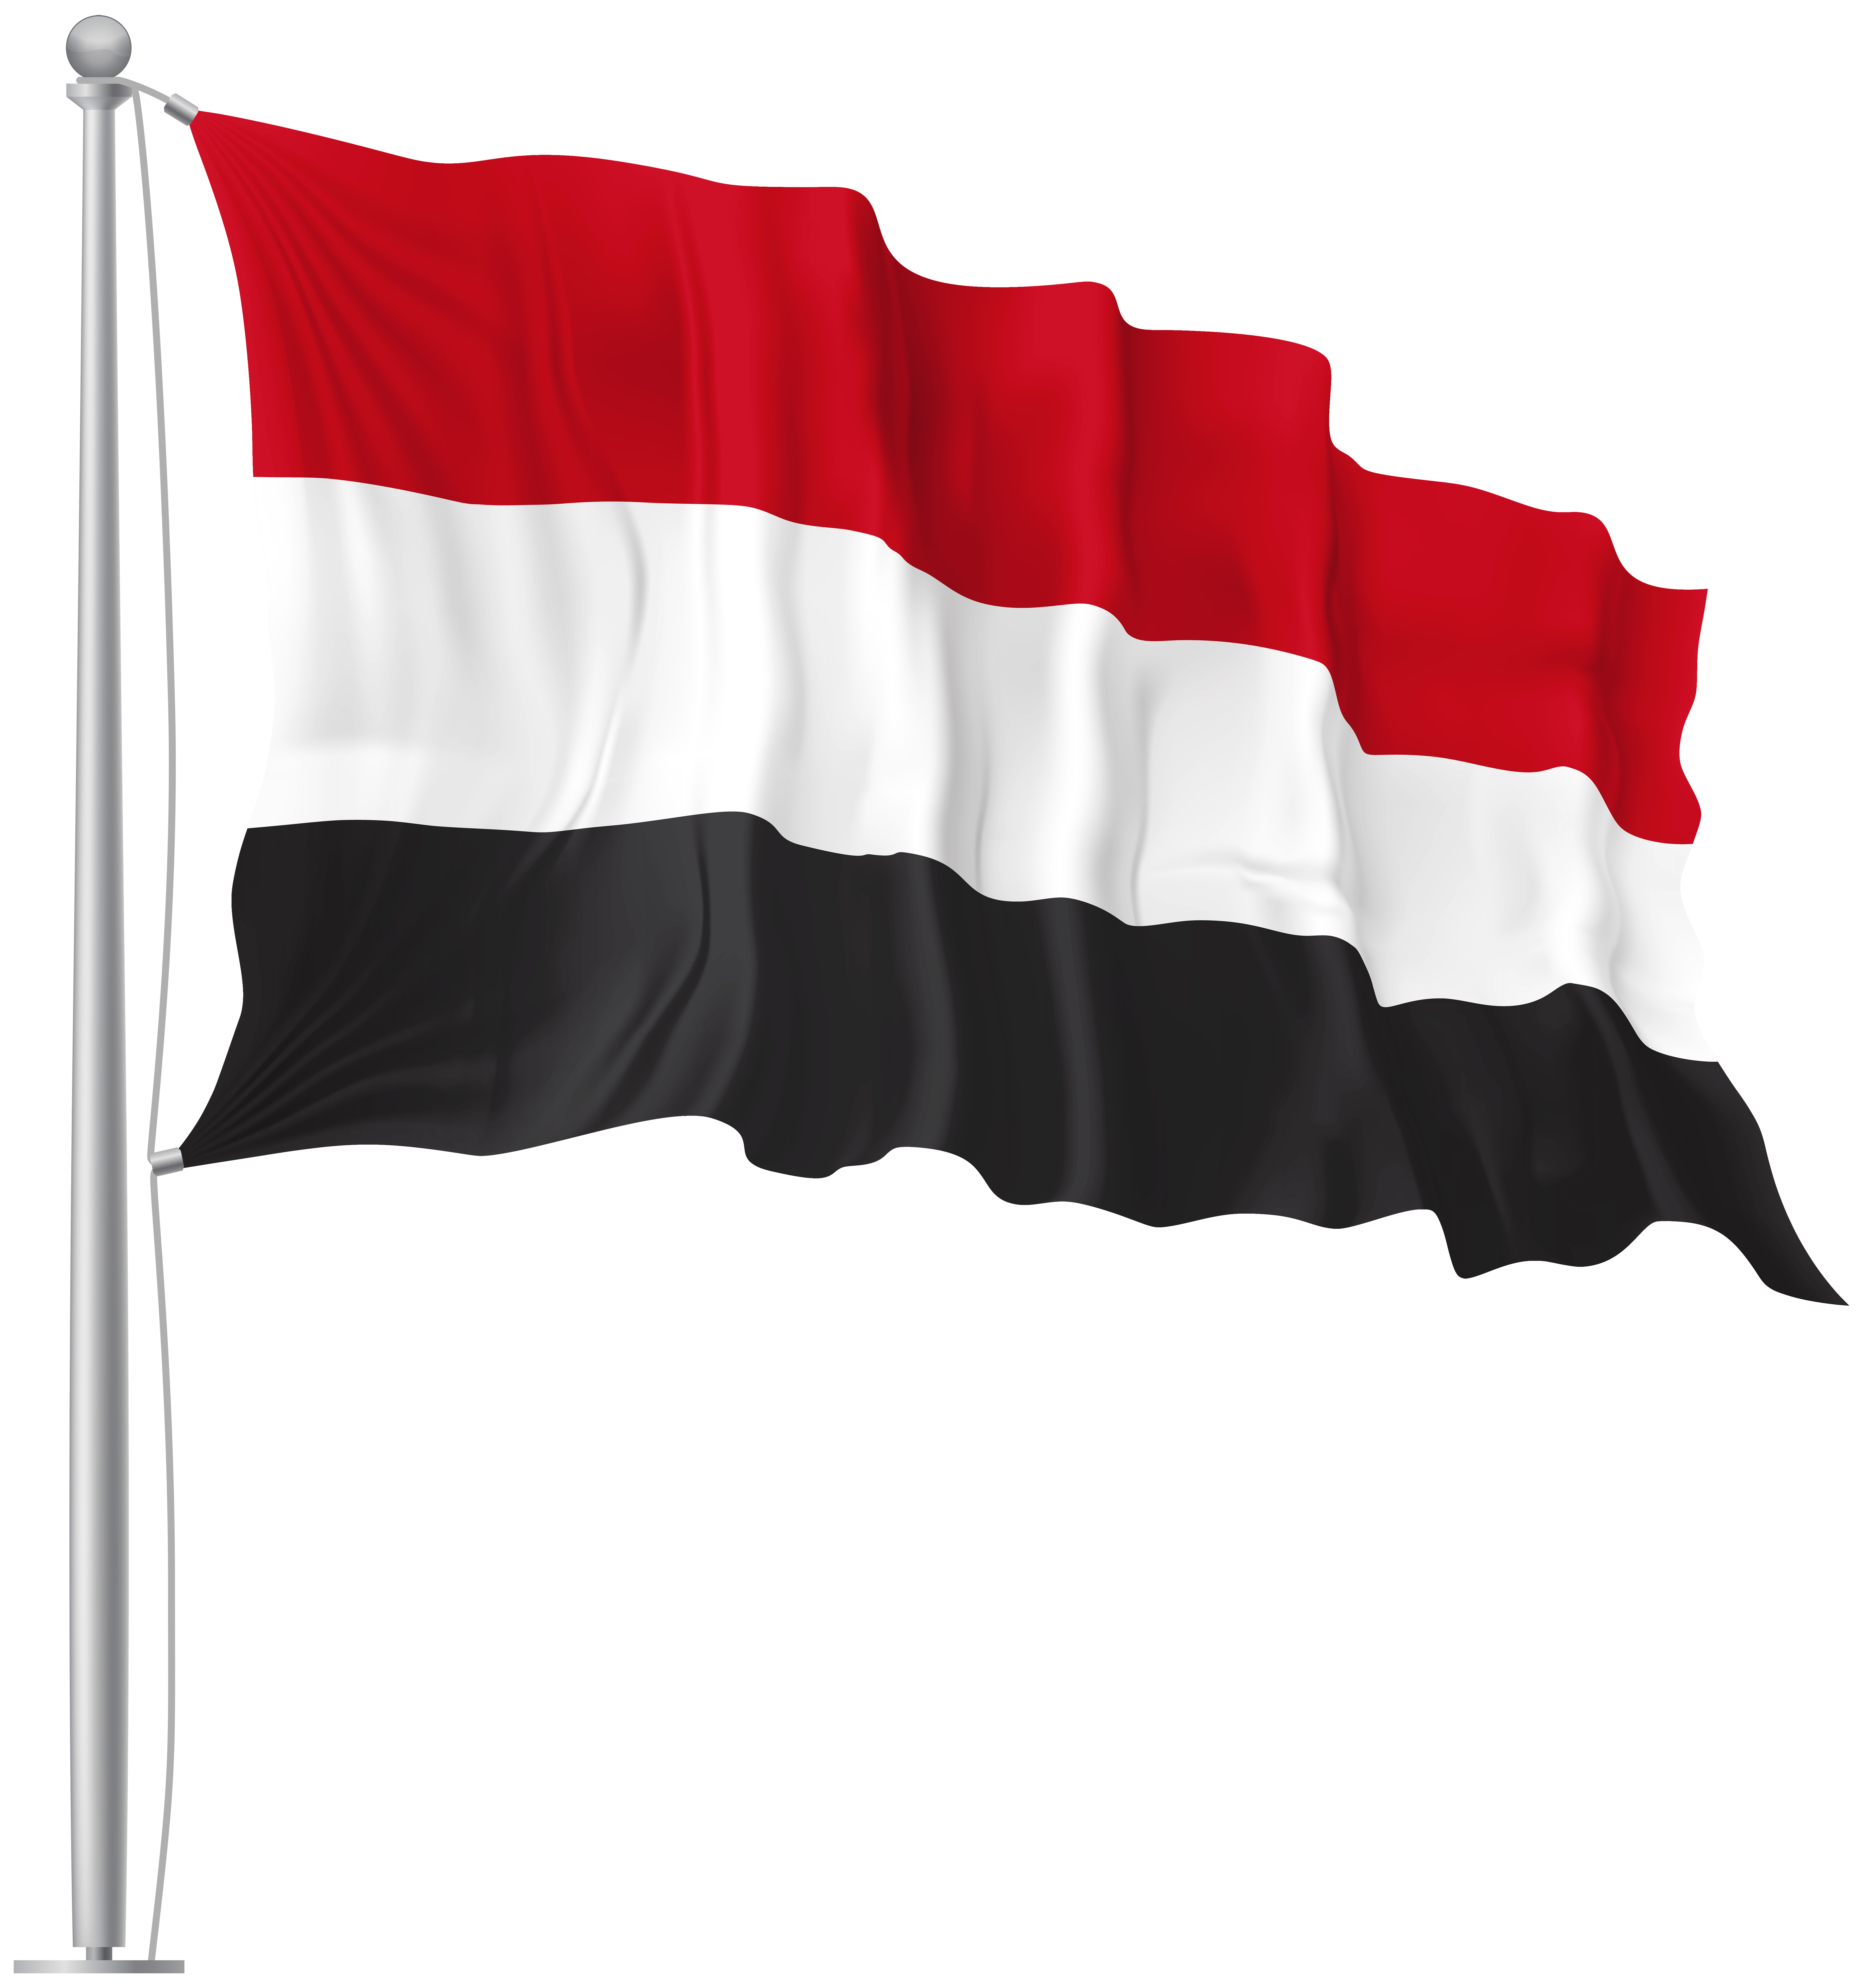 Yemen Waving Flag Image